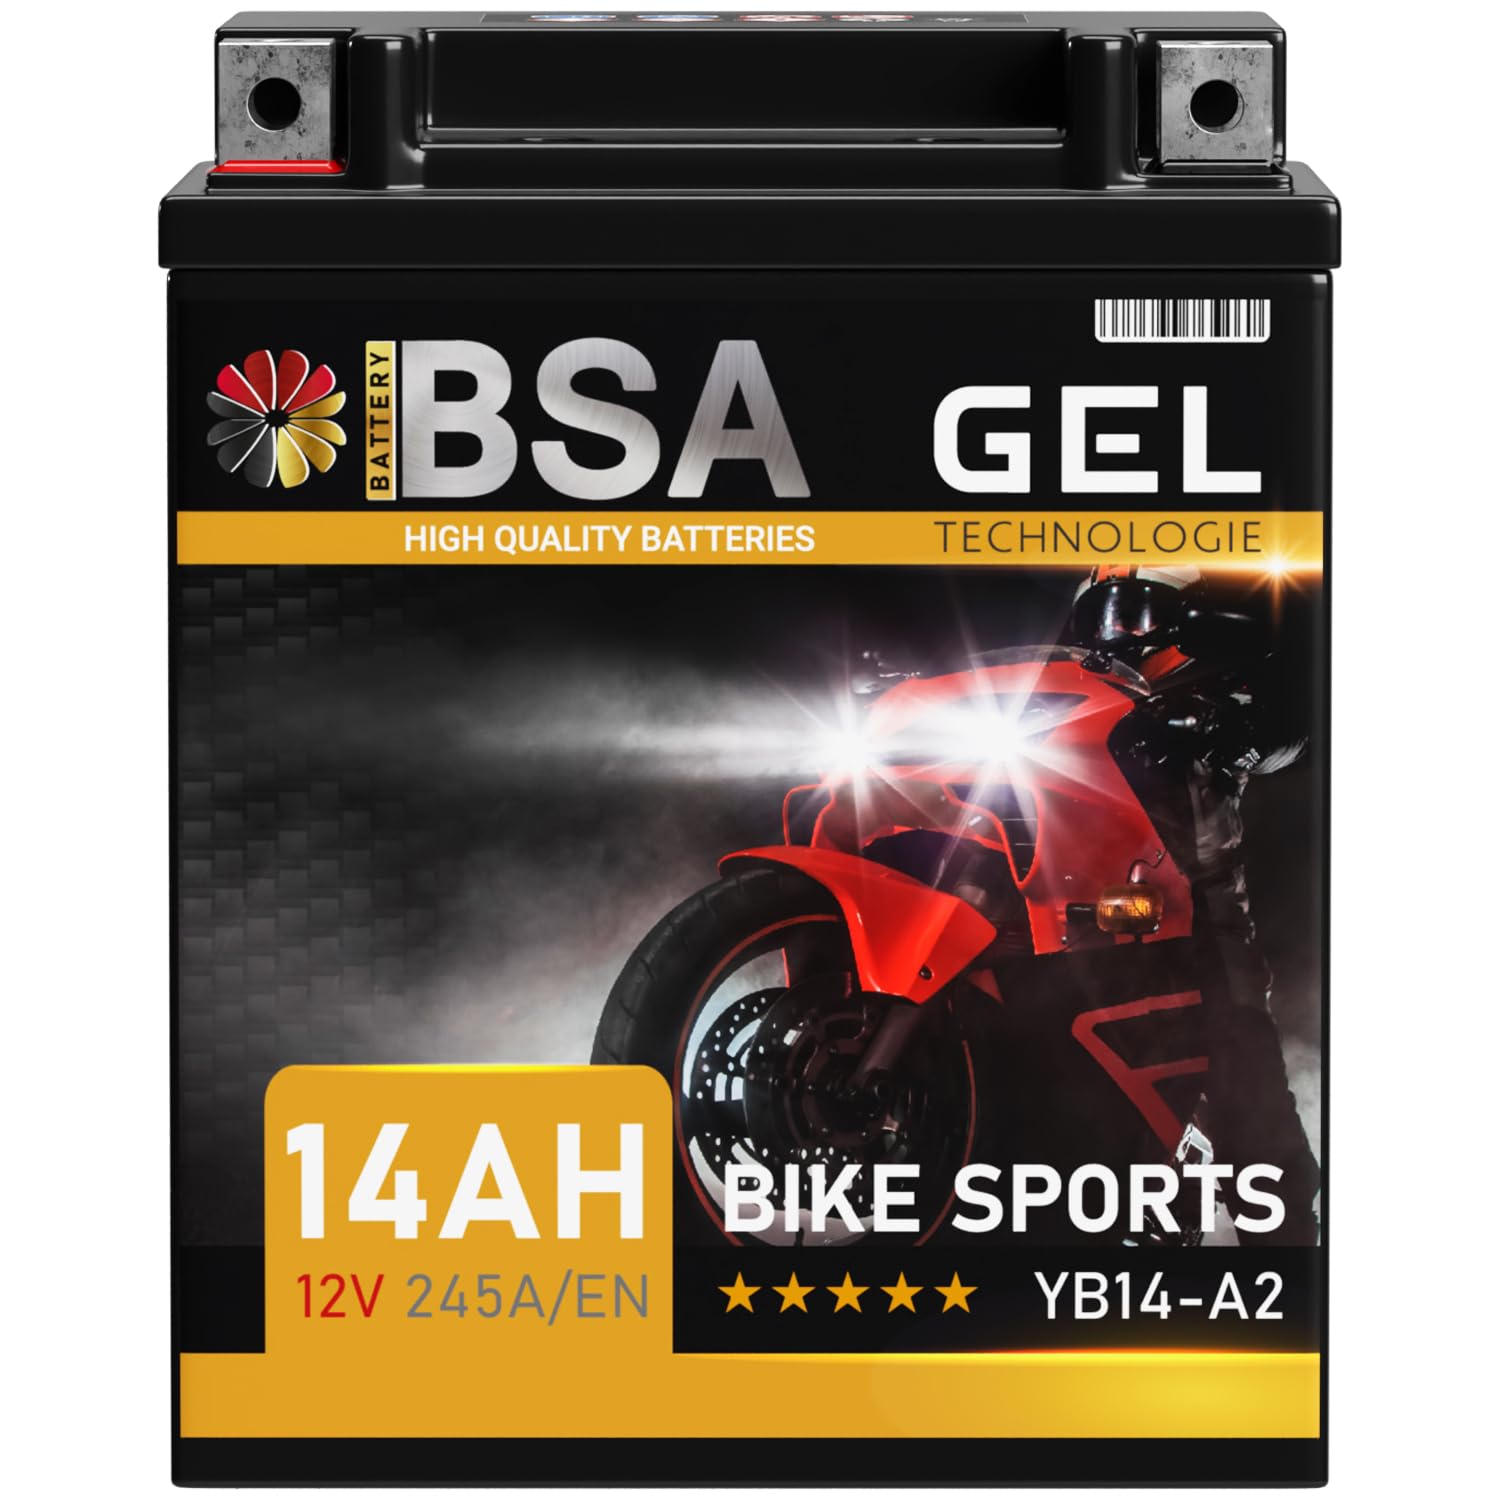 BSA YB14-A2 GEL Roller Batterie 12V 14Ah 245A/EN Motorradbatterie doppelte Lebensdauer entspricht 51412 CB14-A2 FB14-A2 6Y4P vorgeladen auslaufsicher wartungsfrei von BSA BATTERY HIGH QUALITY BATTERIES